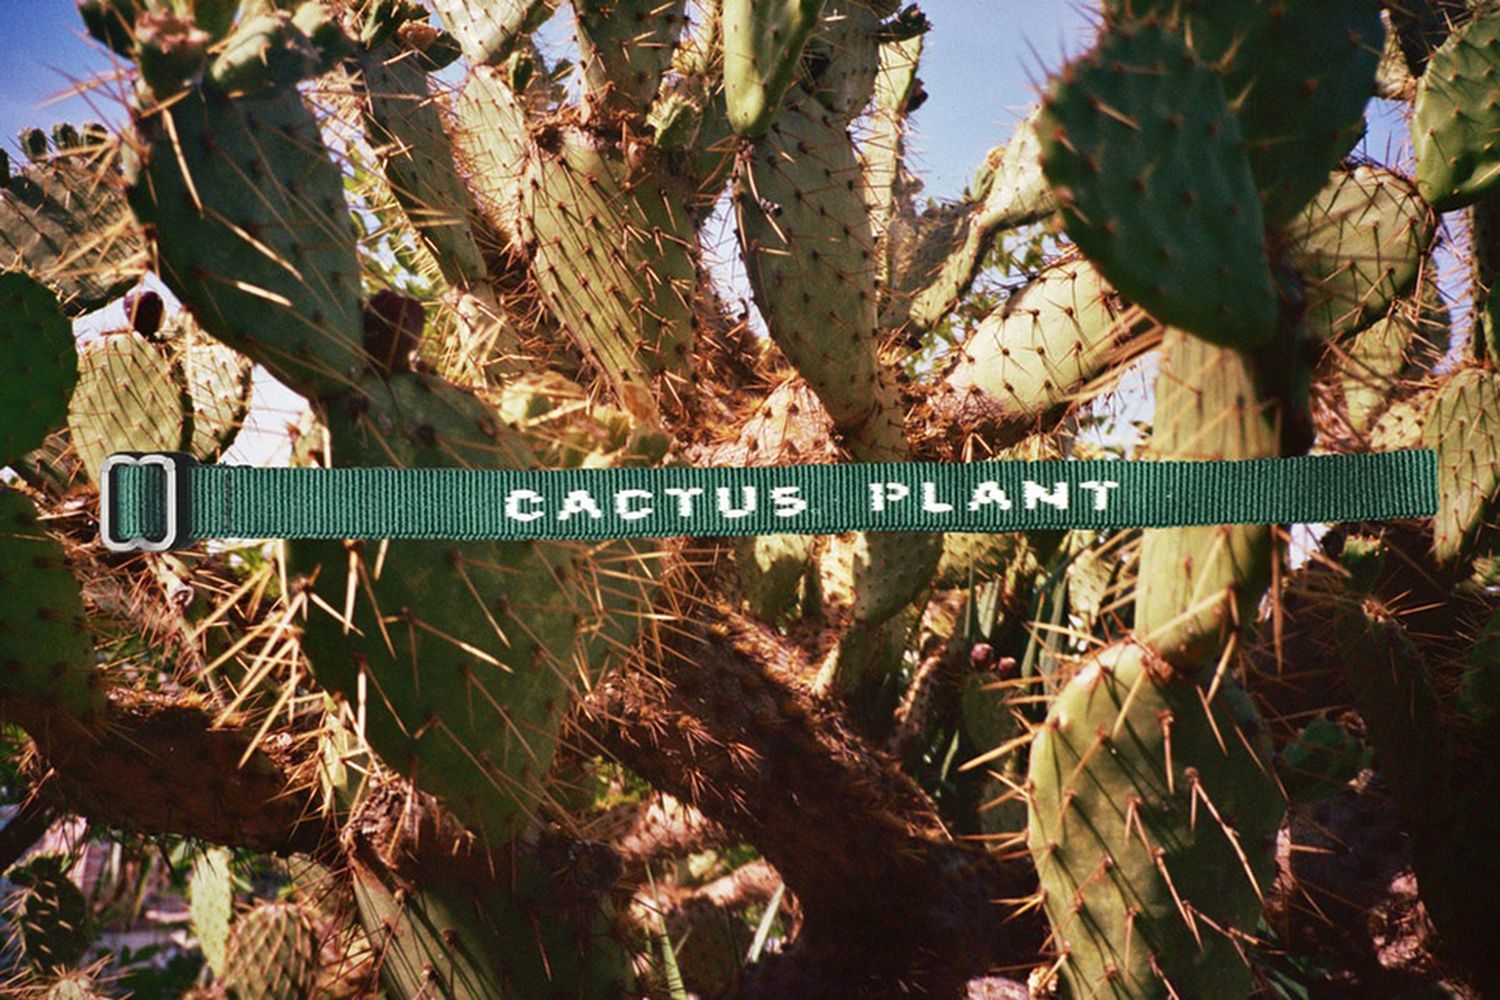 Cactus Plant Identification Tag Bracelet